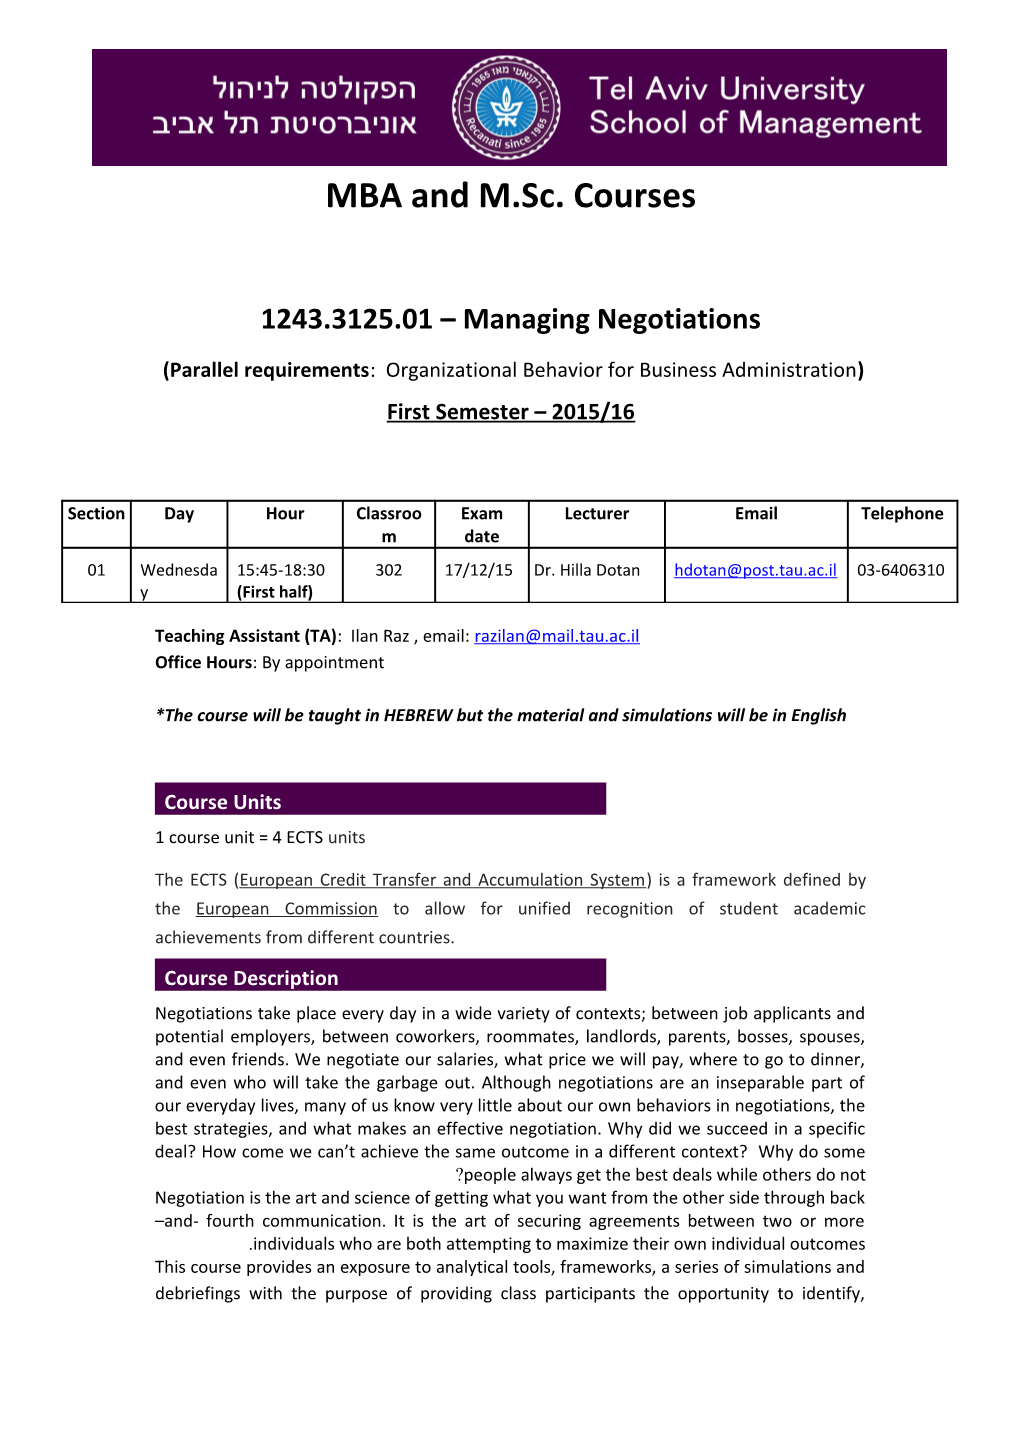 1243.3125.01 Managing Negotiations